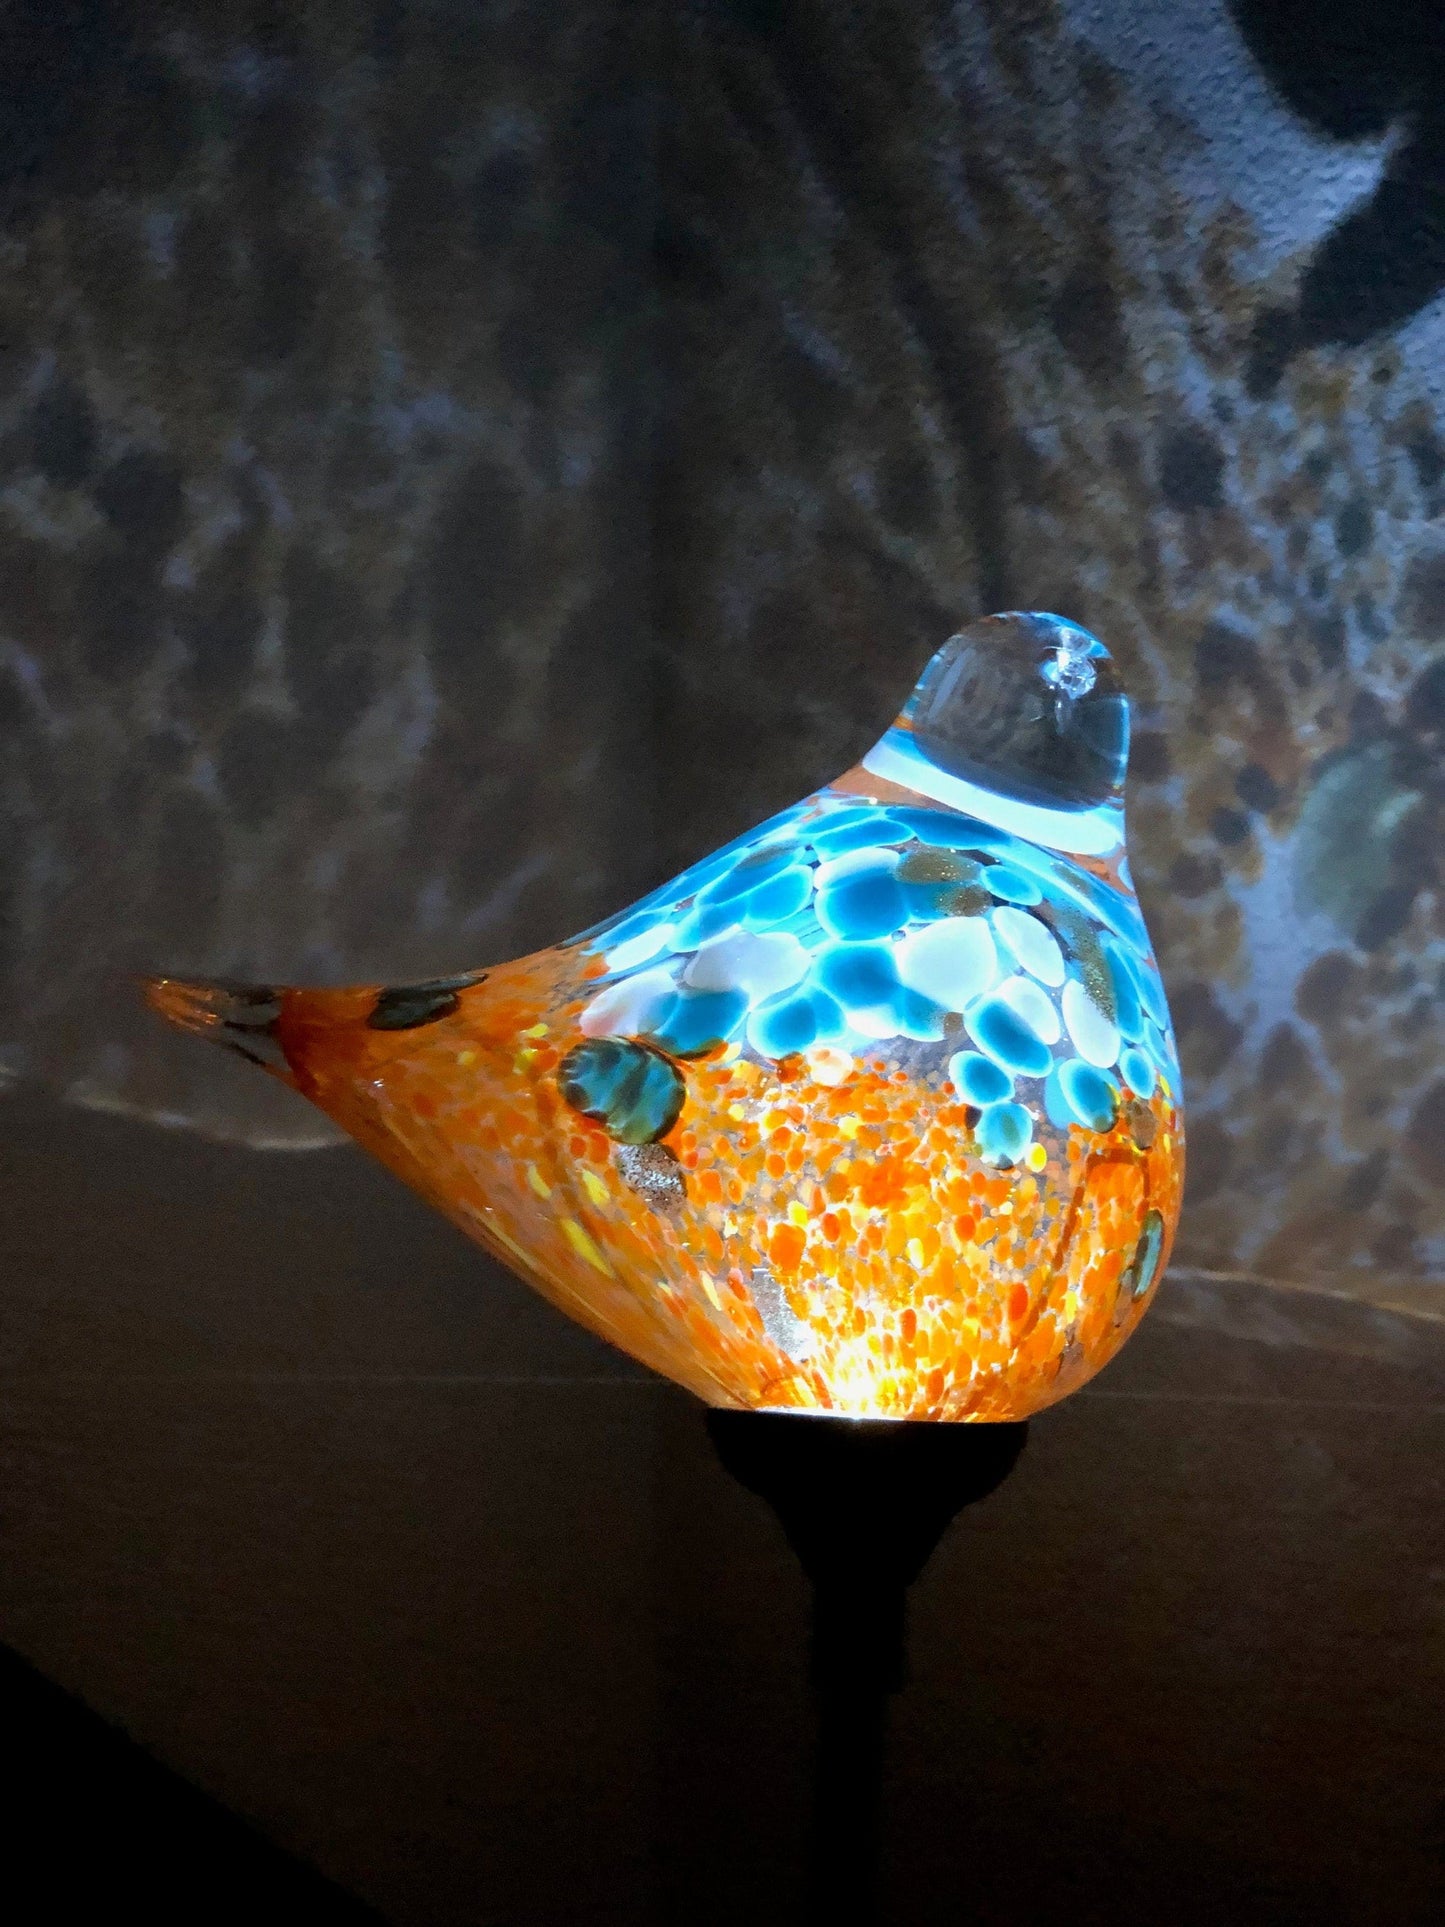 Set of 2 Handmade Art Glass LED Solar path garden lights - Bird Sun Catcher Garden Stake Statue Figurine- Orange Blue